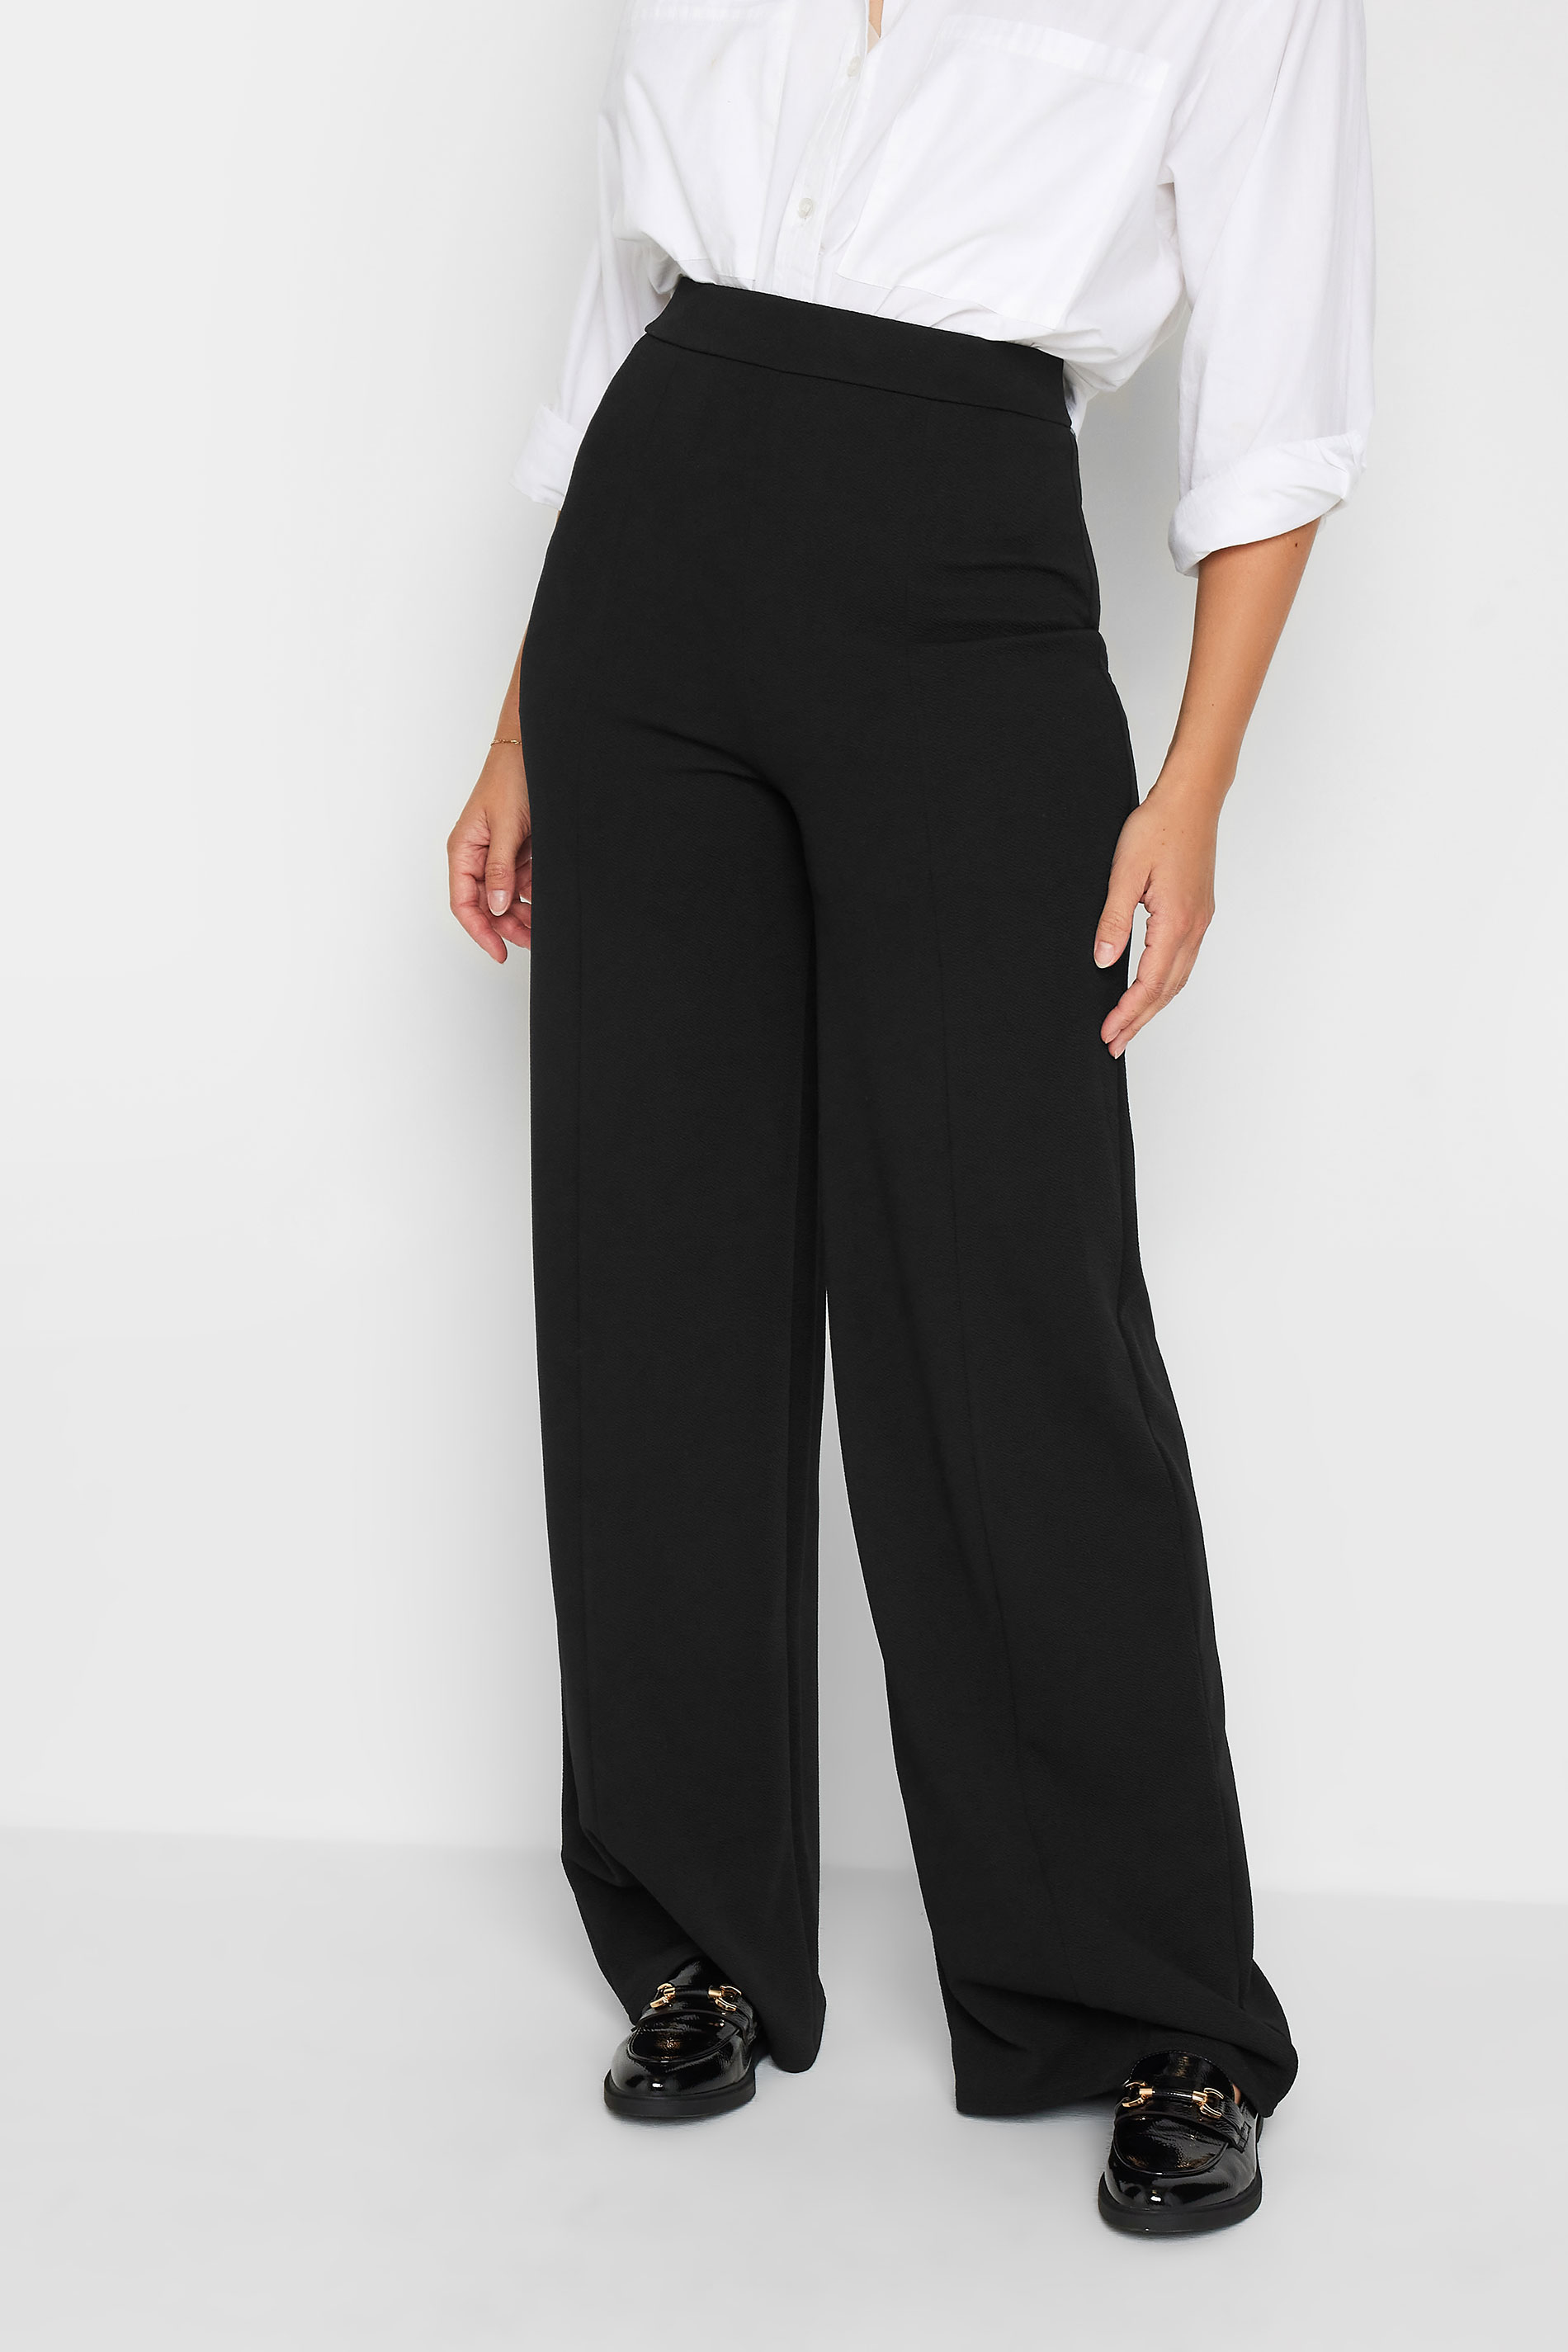 LTS Tall Black Pin Tuck Wide Leg Trousers | Long Tall Sally 1